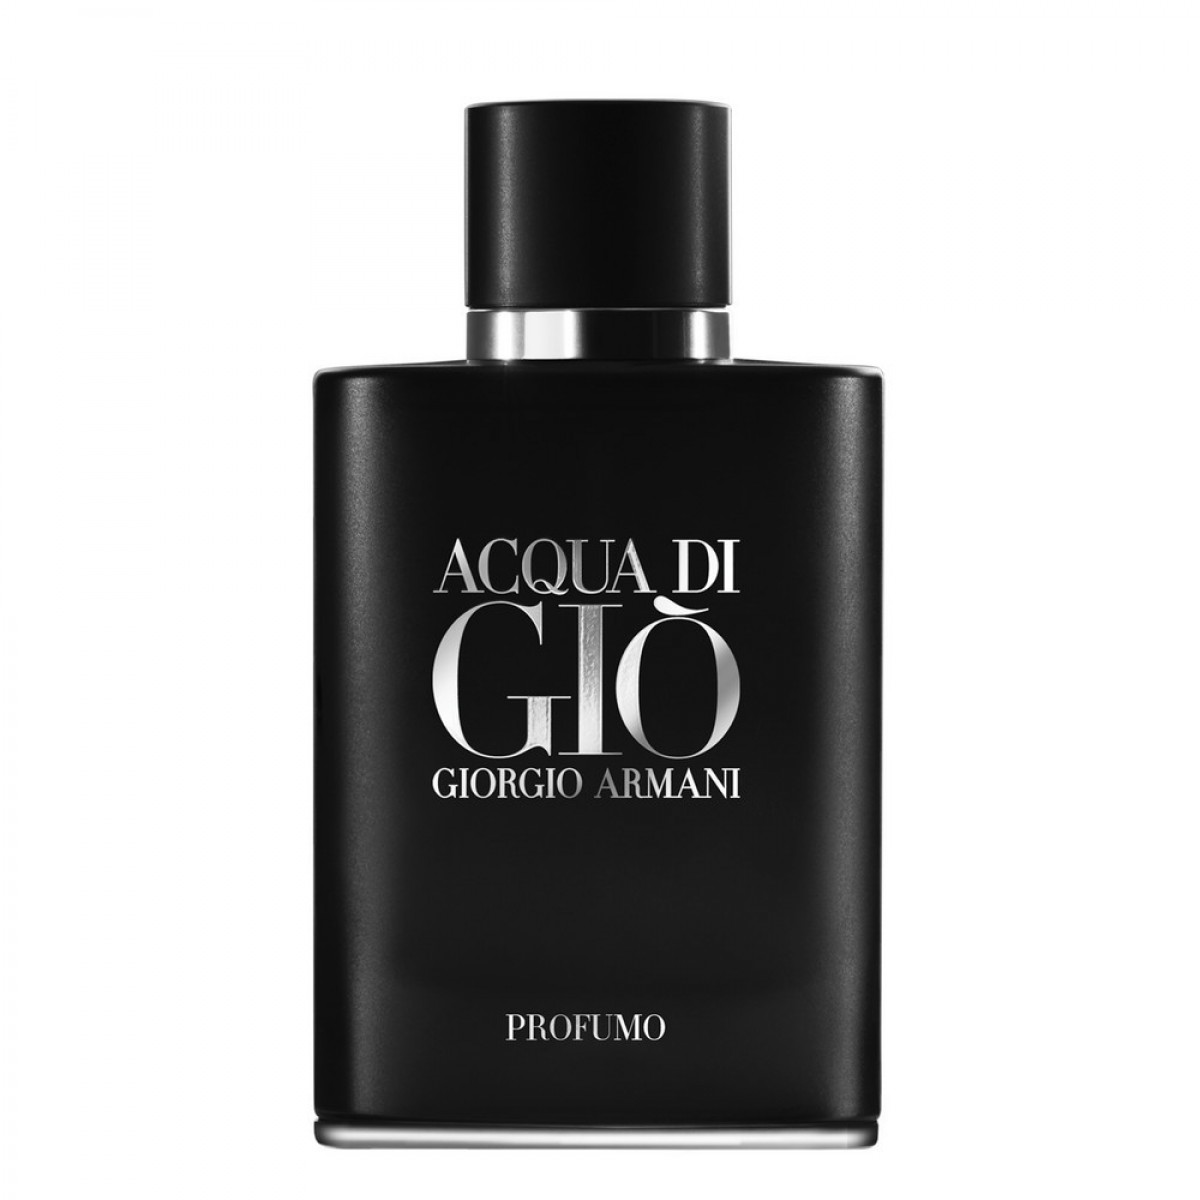 Stillehavsøer Lionel Green Street svimmelhed Acqua di Gio Profumo Eau de Parfum | Burmunk Perfumery Chain